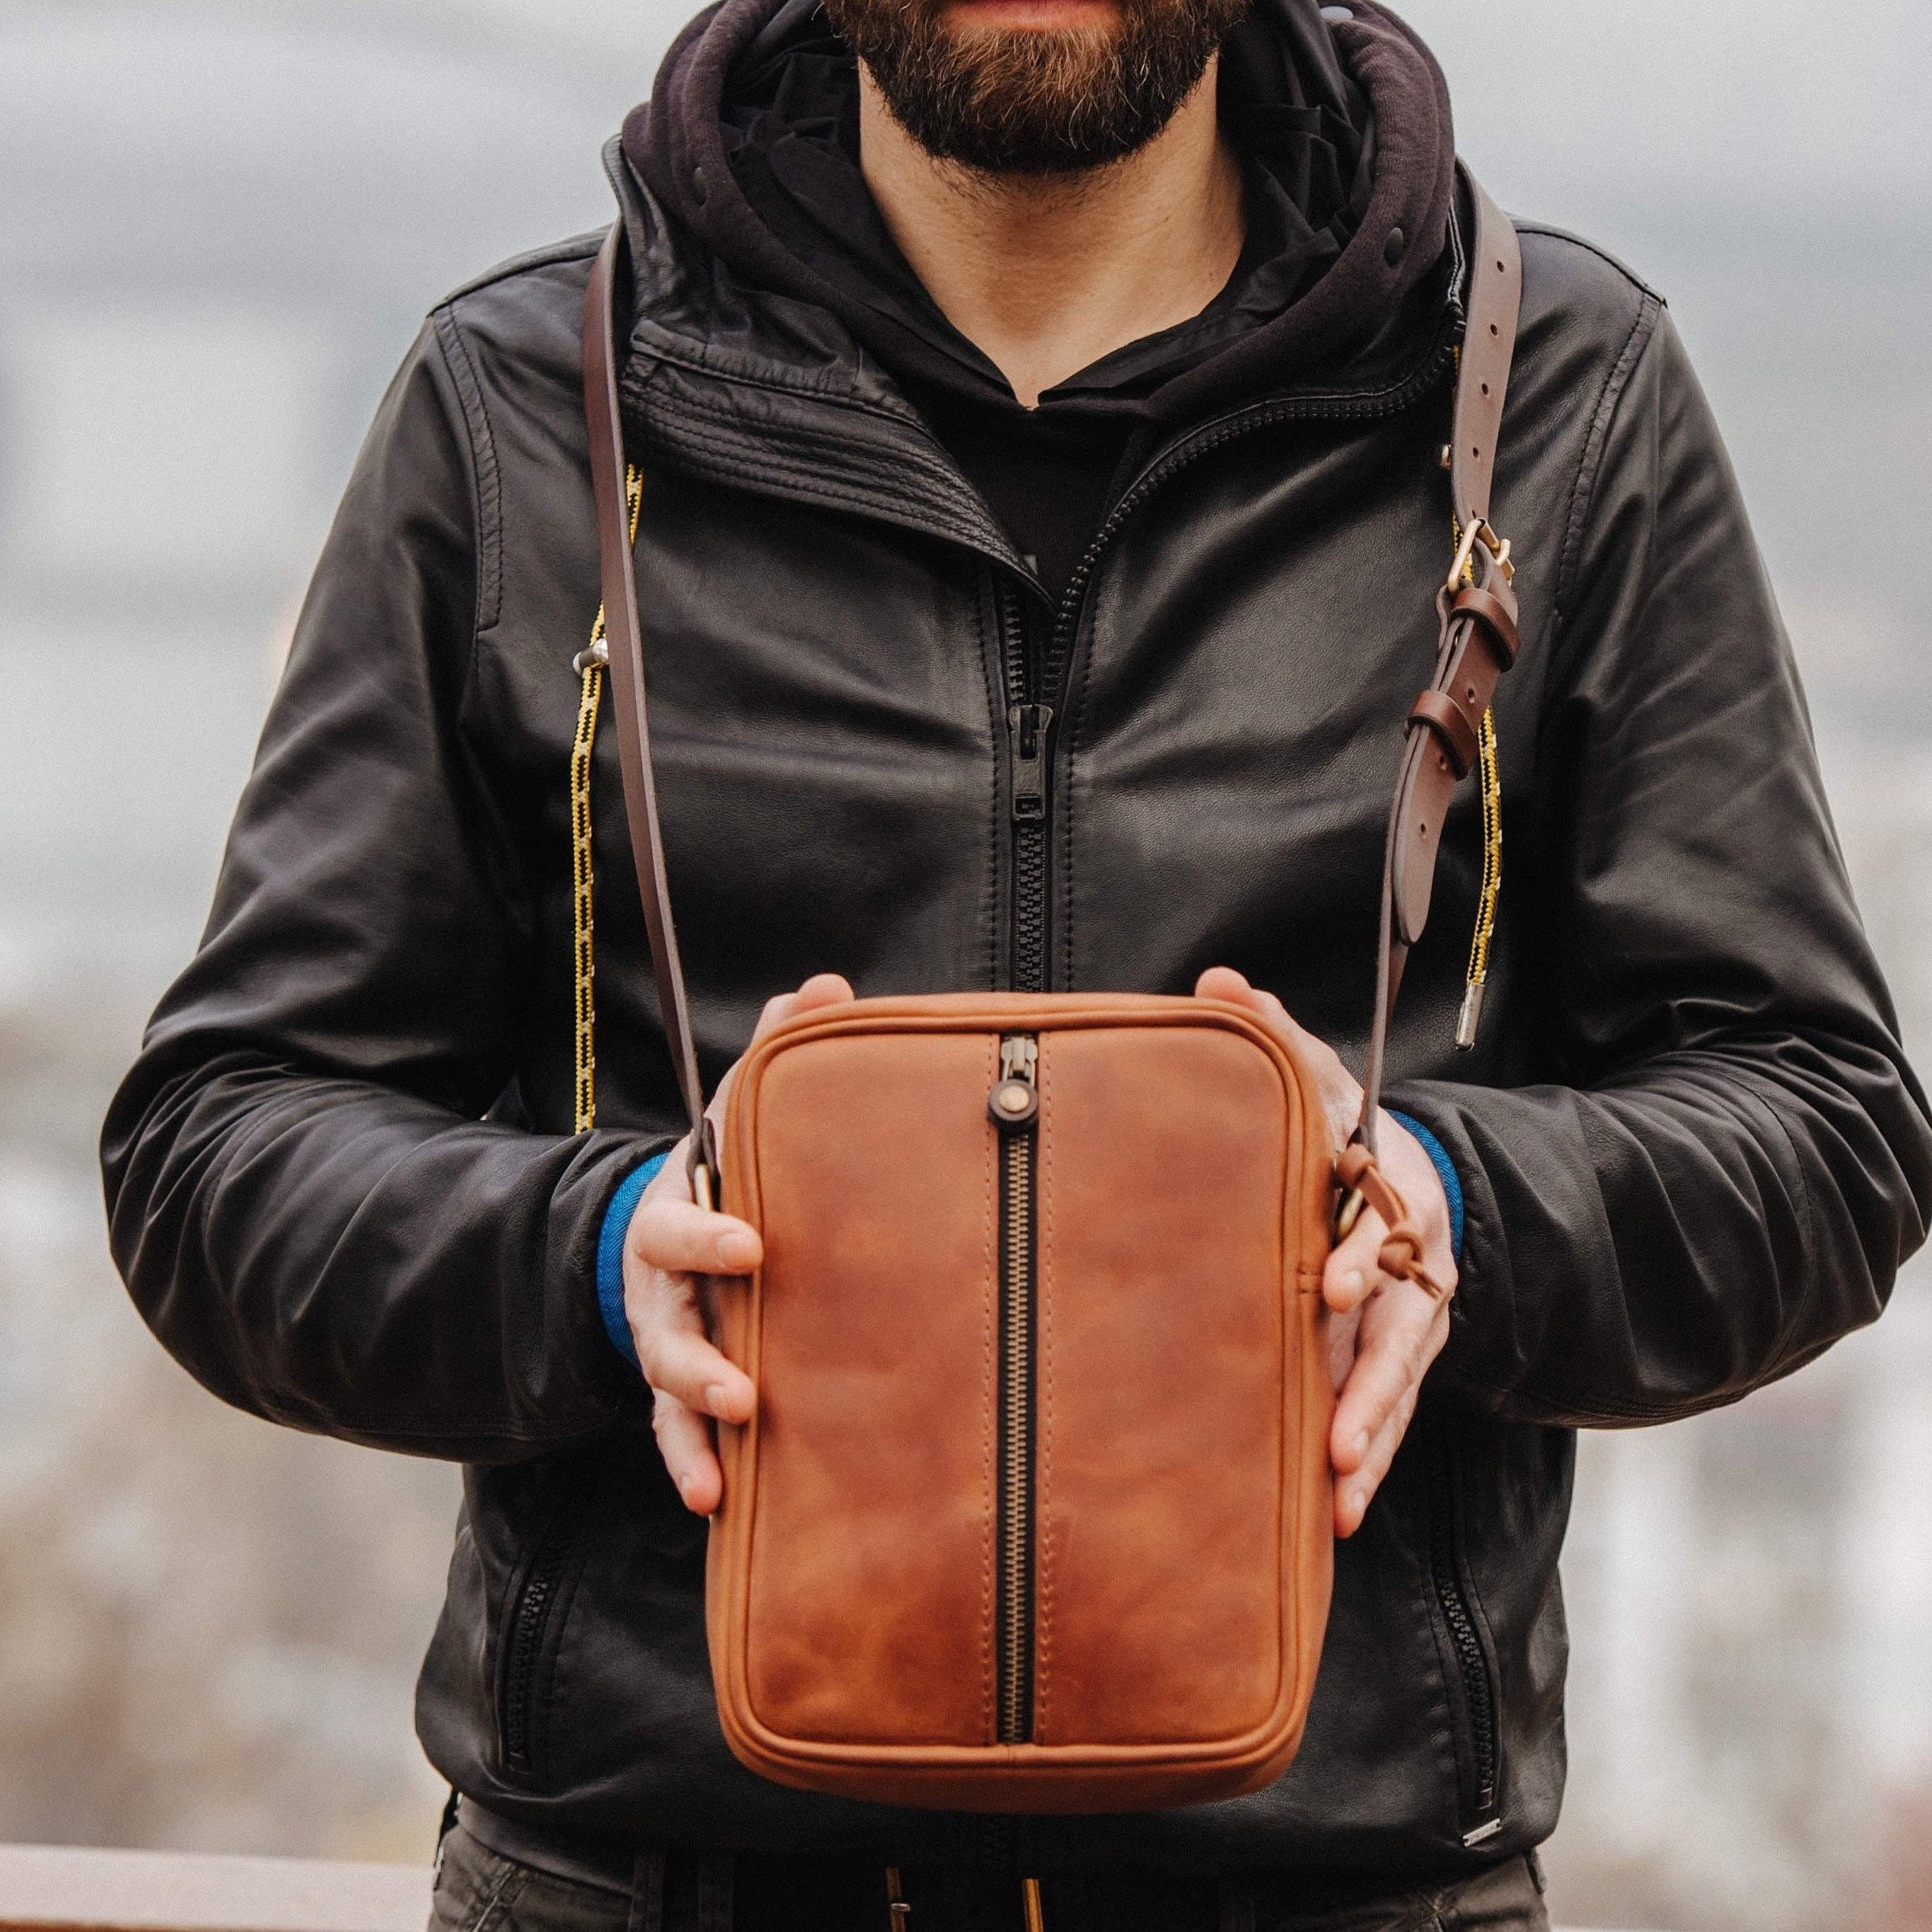 KEVIN-Men's handmade genuine leather crossbody bag with front pocket